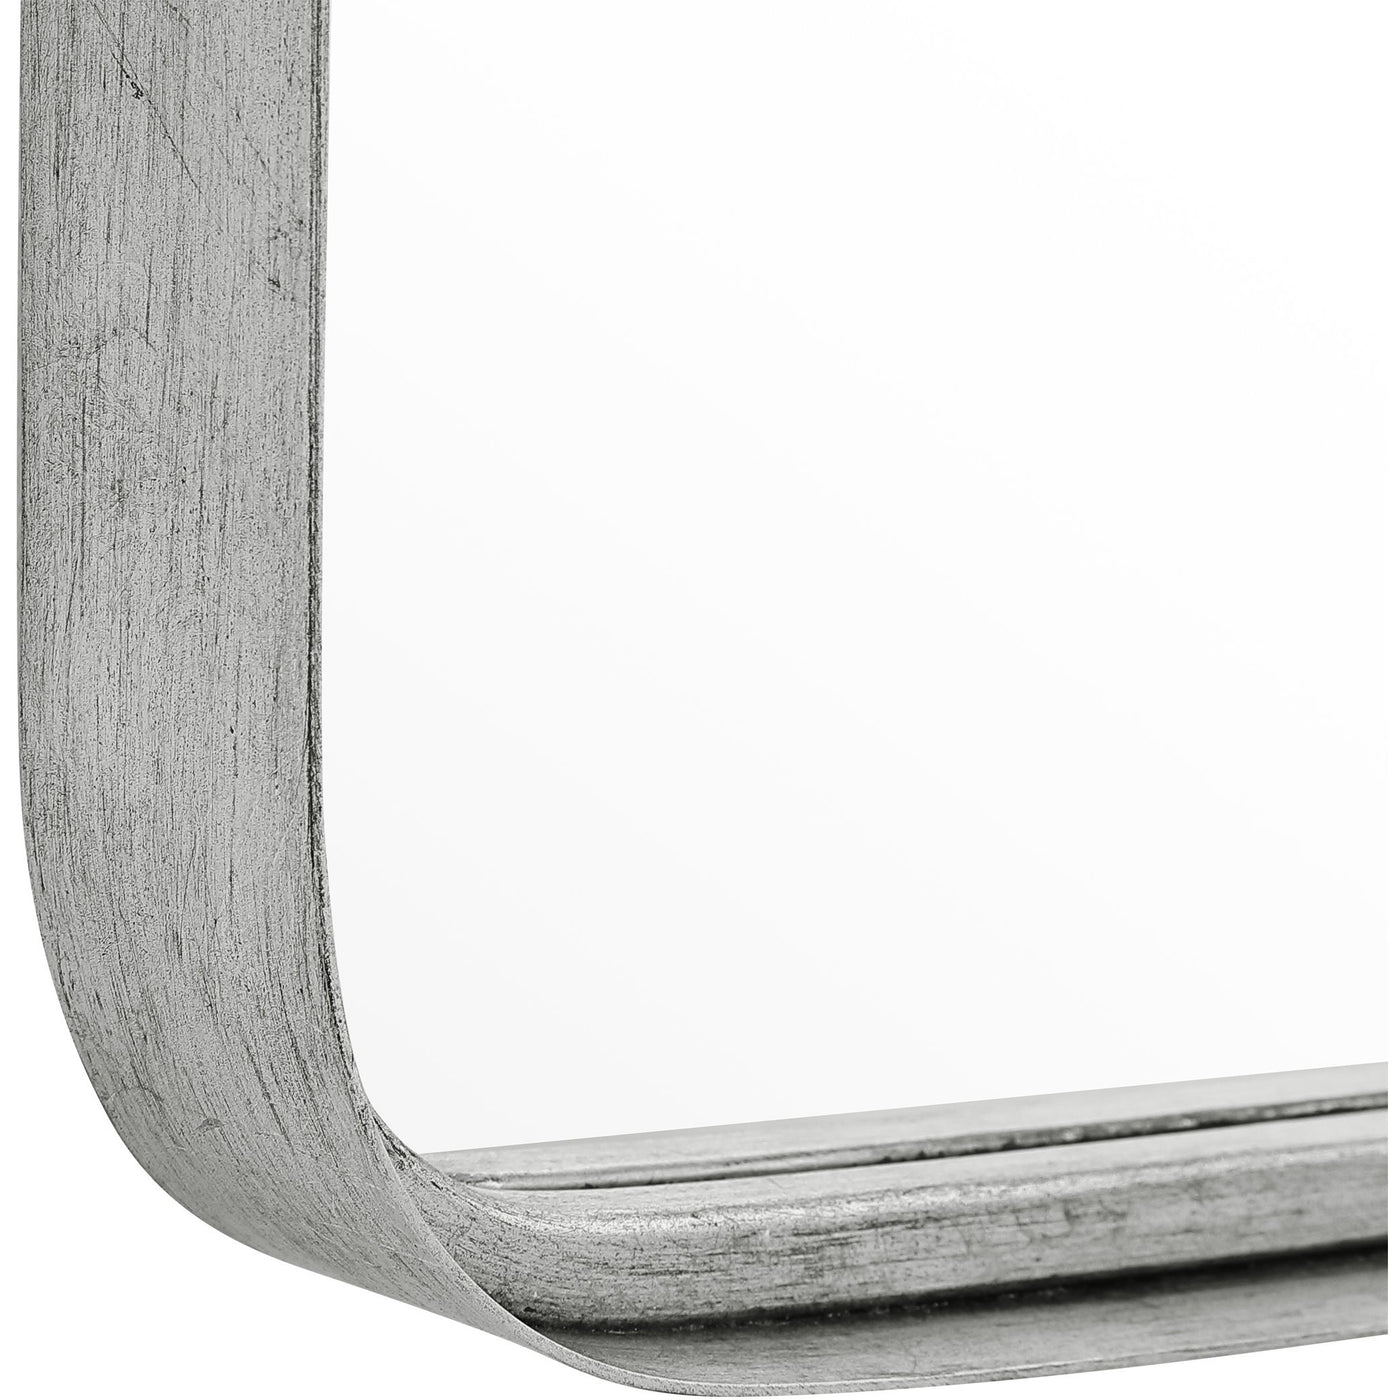 The Summerville - Silver Full Floor Length Dressing Mirror - Glass.com